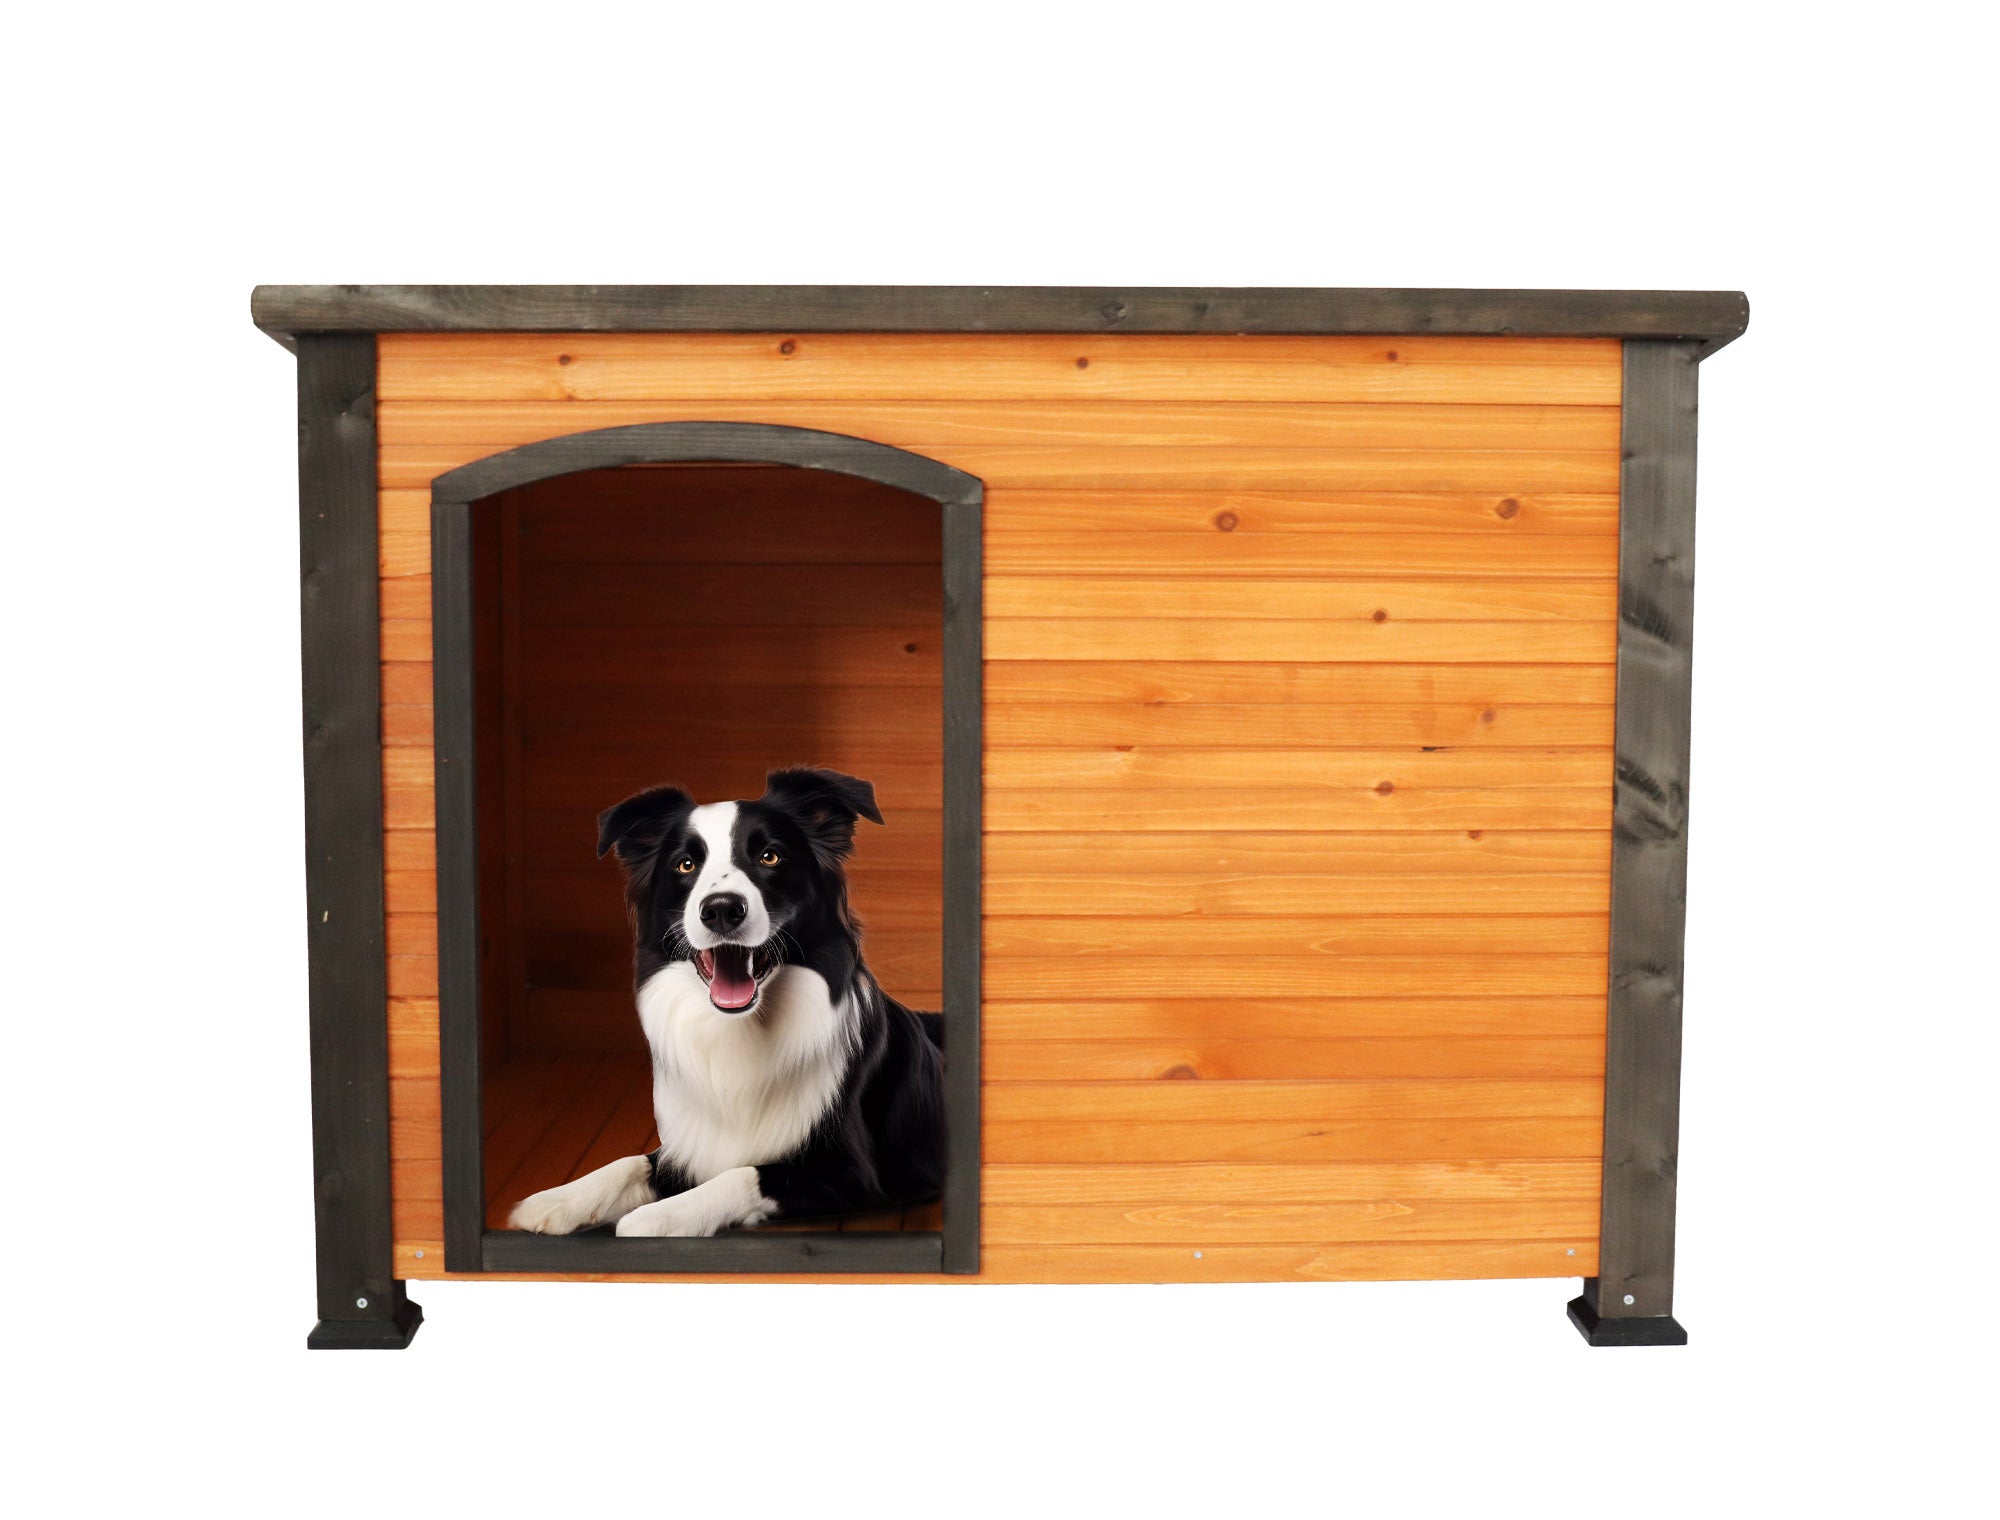 45" winter warm outdoor indoor dog house, made of